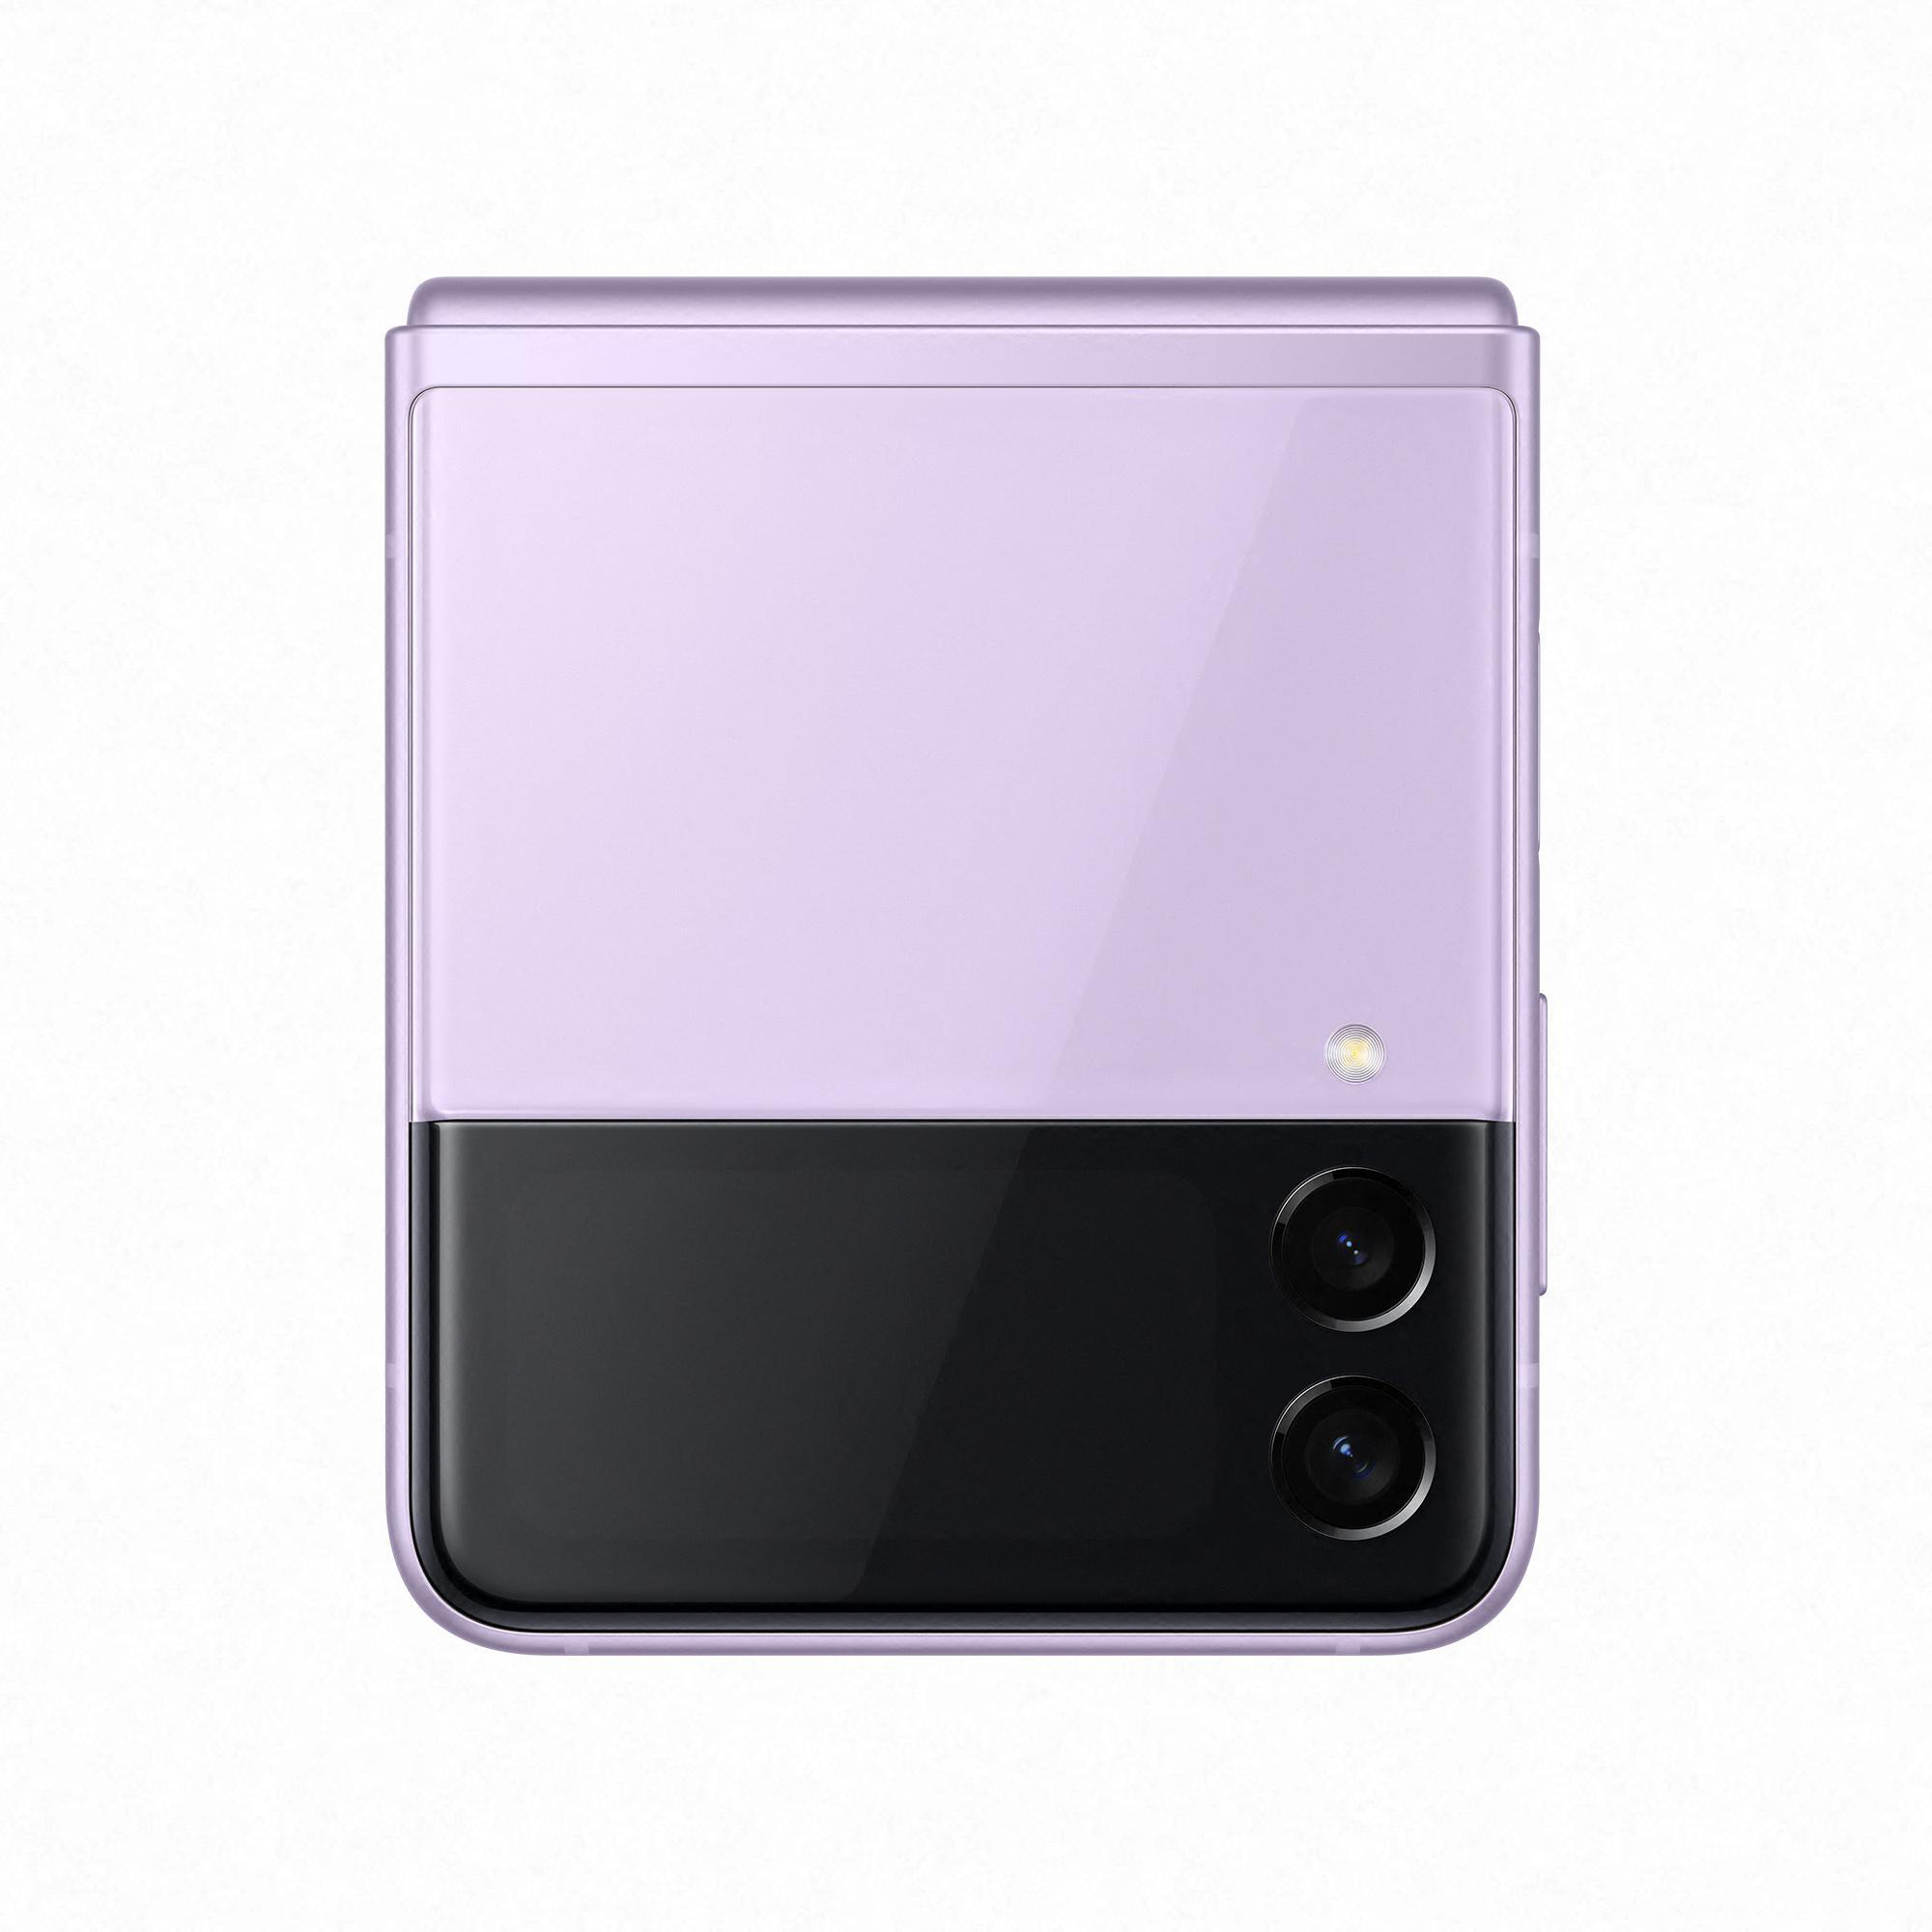 5G Flip3 Z GB NE Galaxy Dual SAMSUNG SIM Lavender Phantom 256